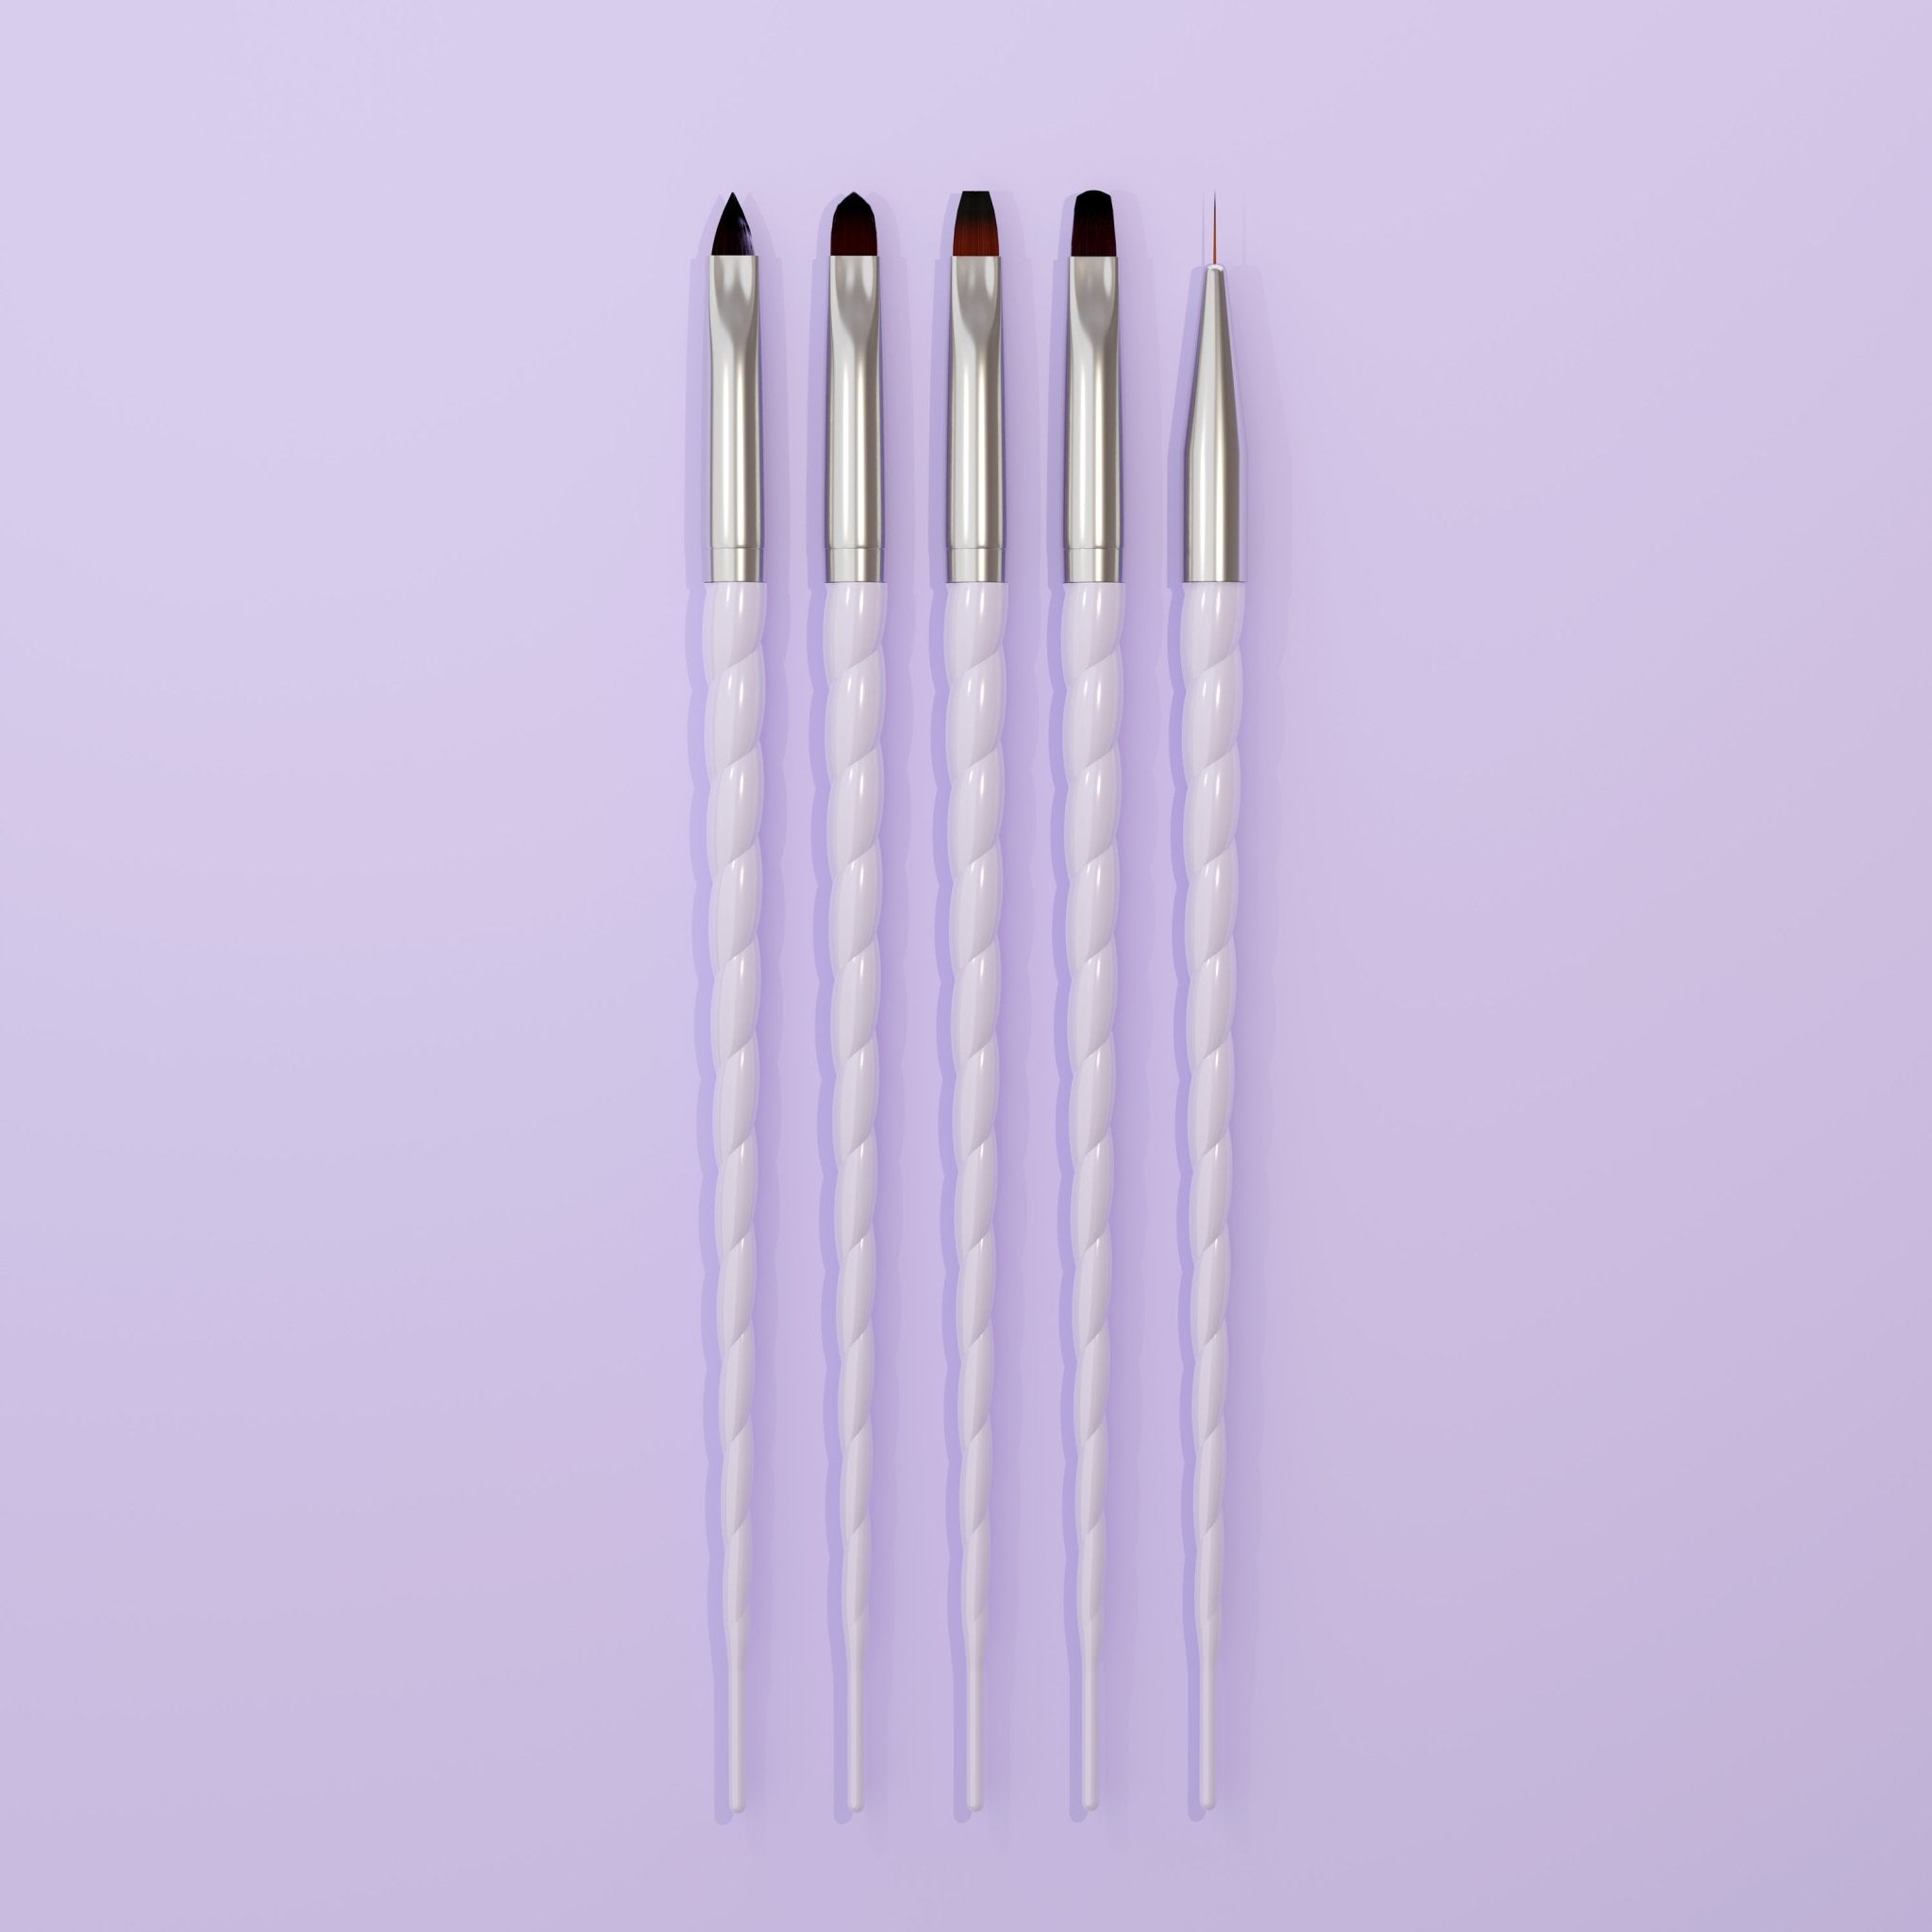 <img scr = “ Maskscara Unicorn Brush Set.jpg” alt = “ Unicorn Nail Art Brush Set by the brand Maskscara”>